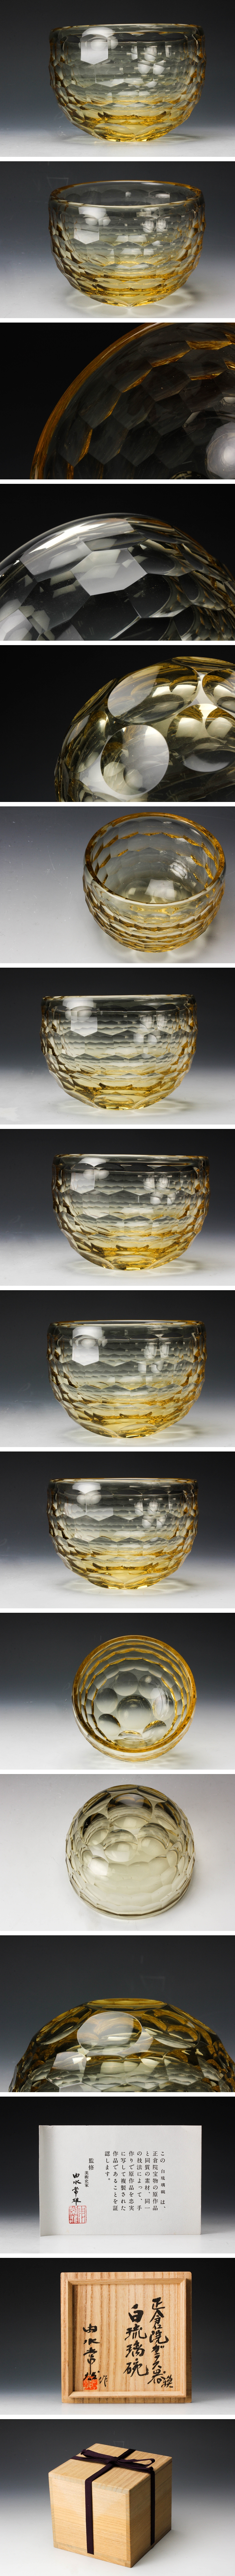 日本製好評由水常雄 正倉院ガラス器模白琉璃碗 共箱 栞 本物保証 工芸ガラス